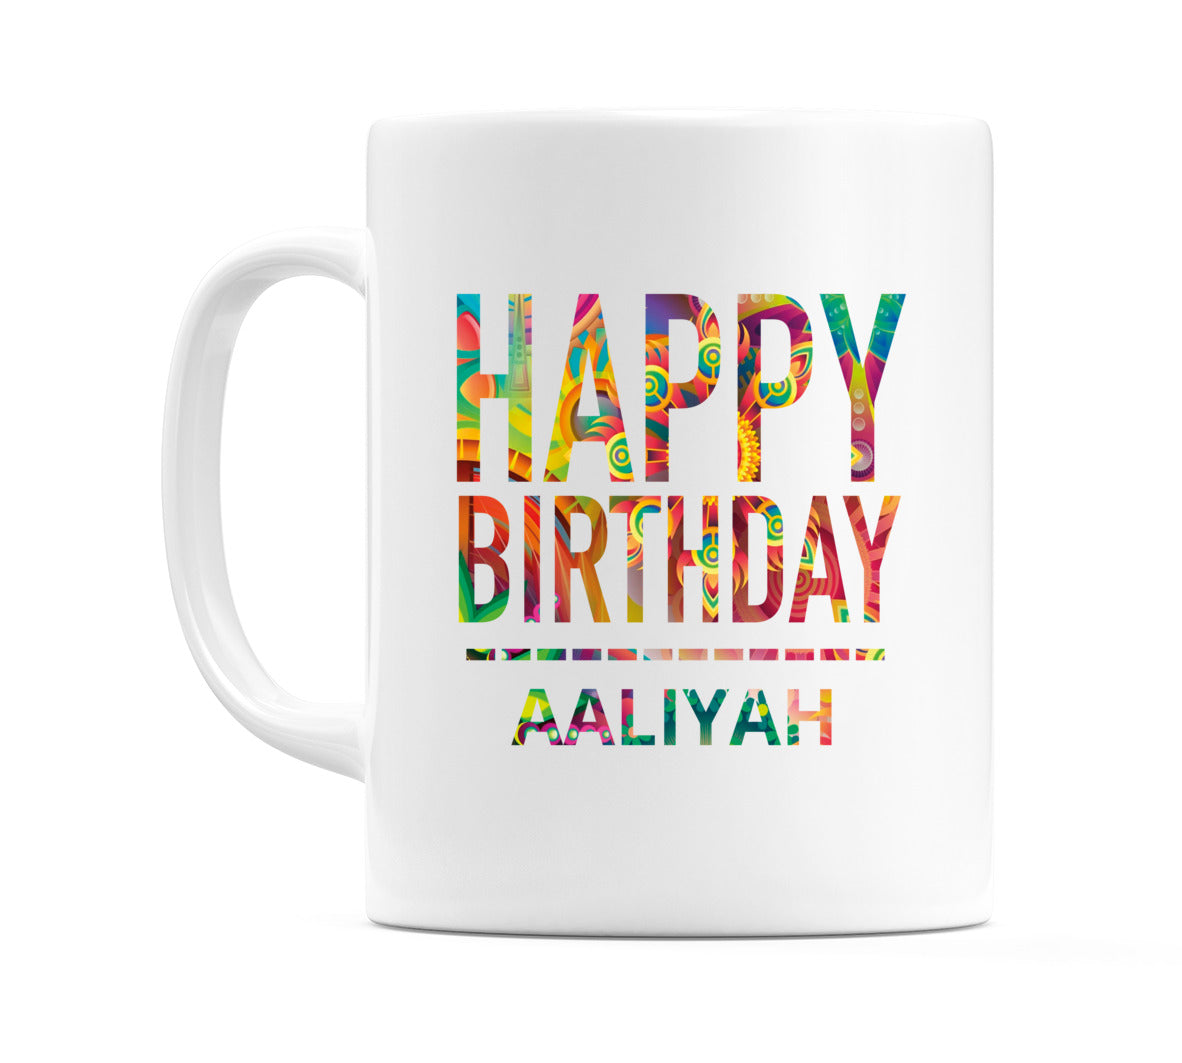 Happy Birthday Aaliyah (Tie Dye Effect) Mug Cup by WeDoMugs